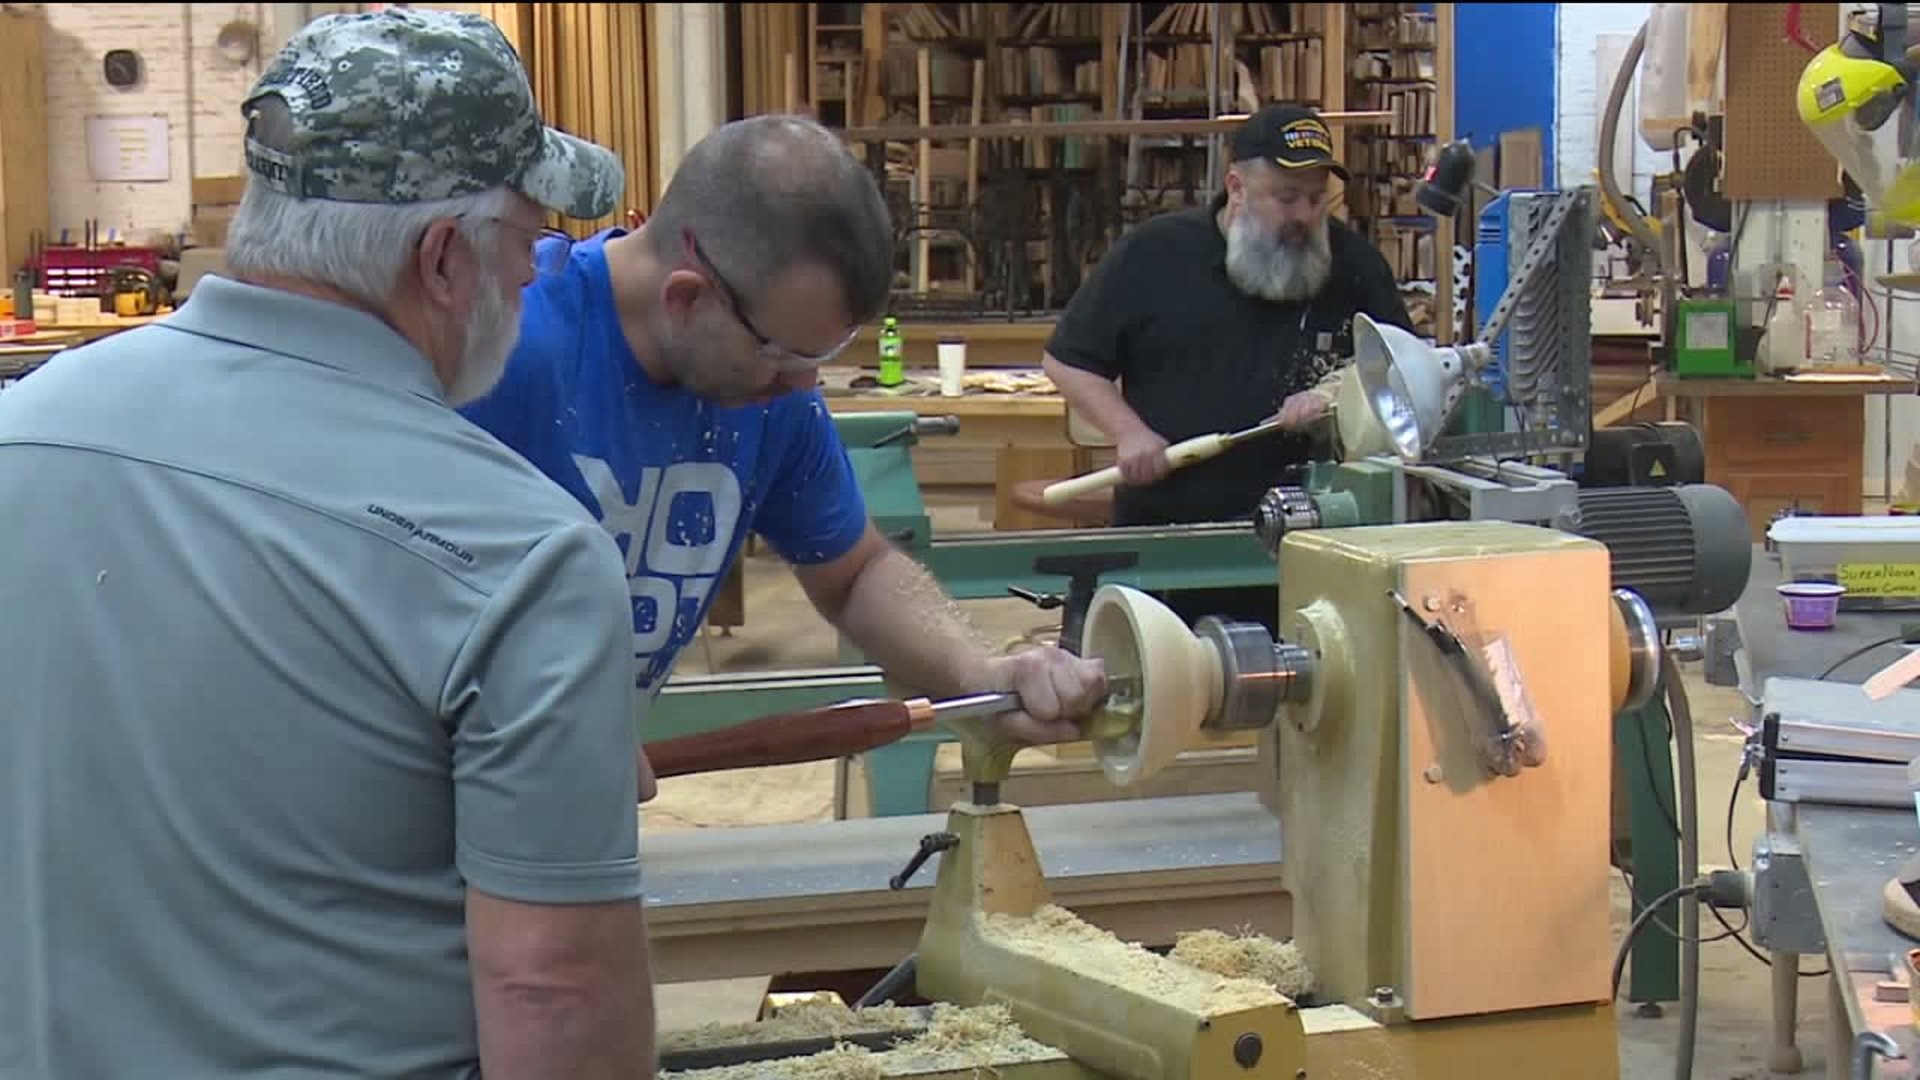 Veterans Bond over Woodwork